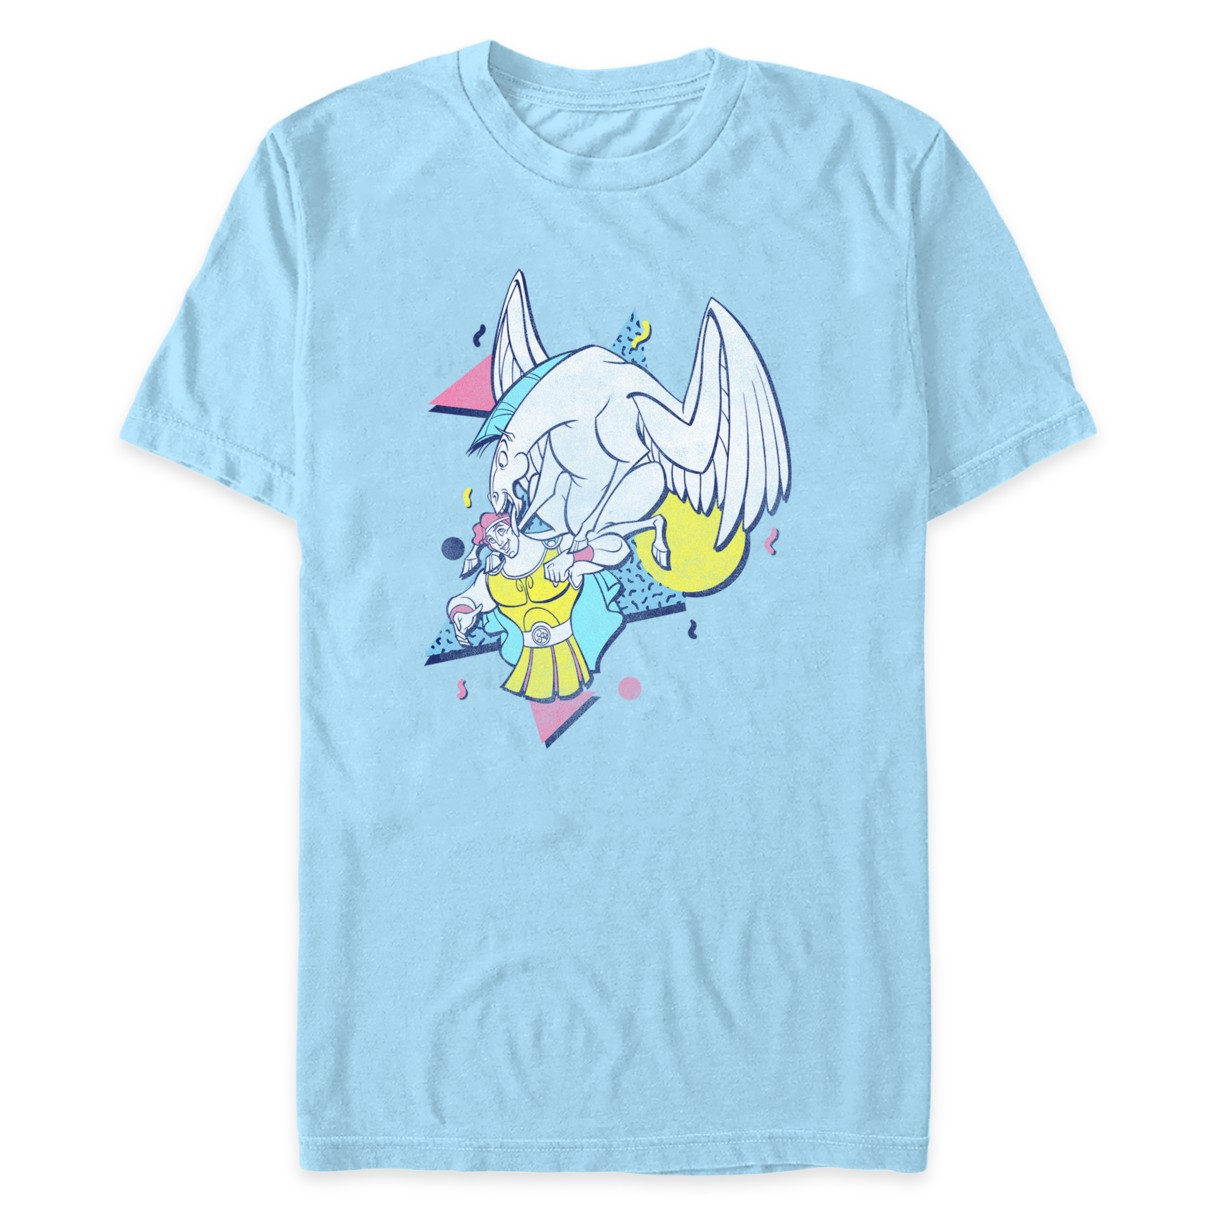 Hercules and Pegasus T-Shirt for Adults